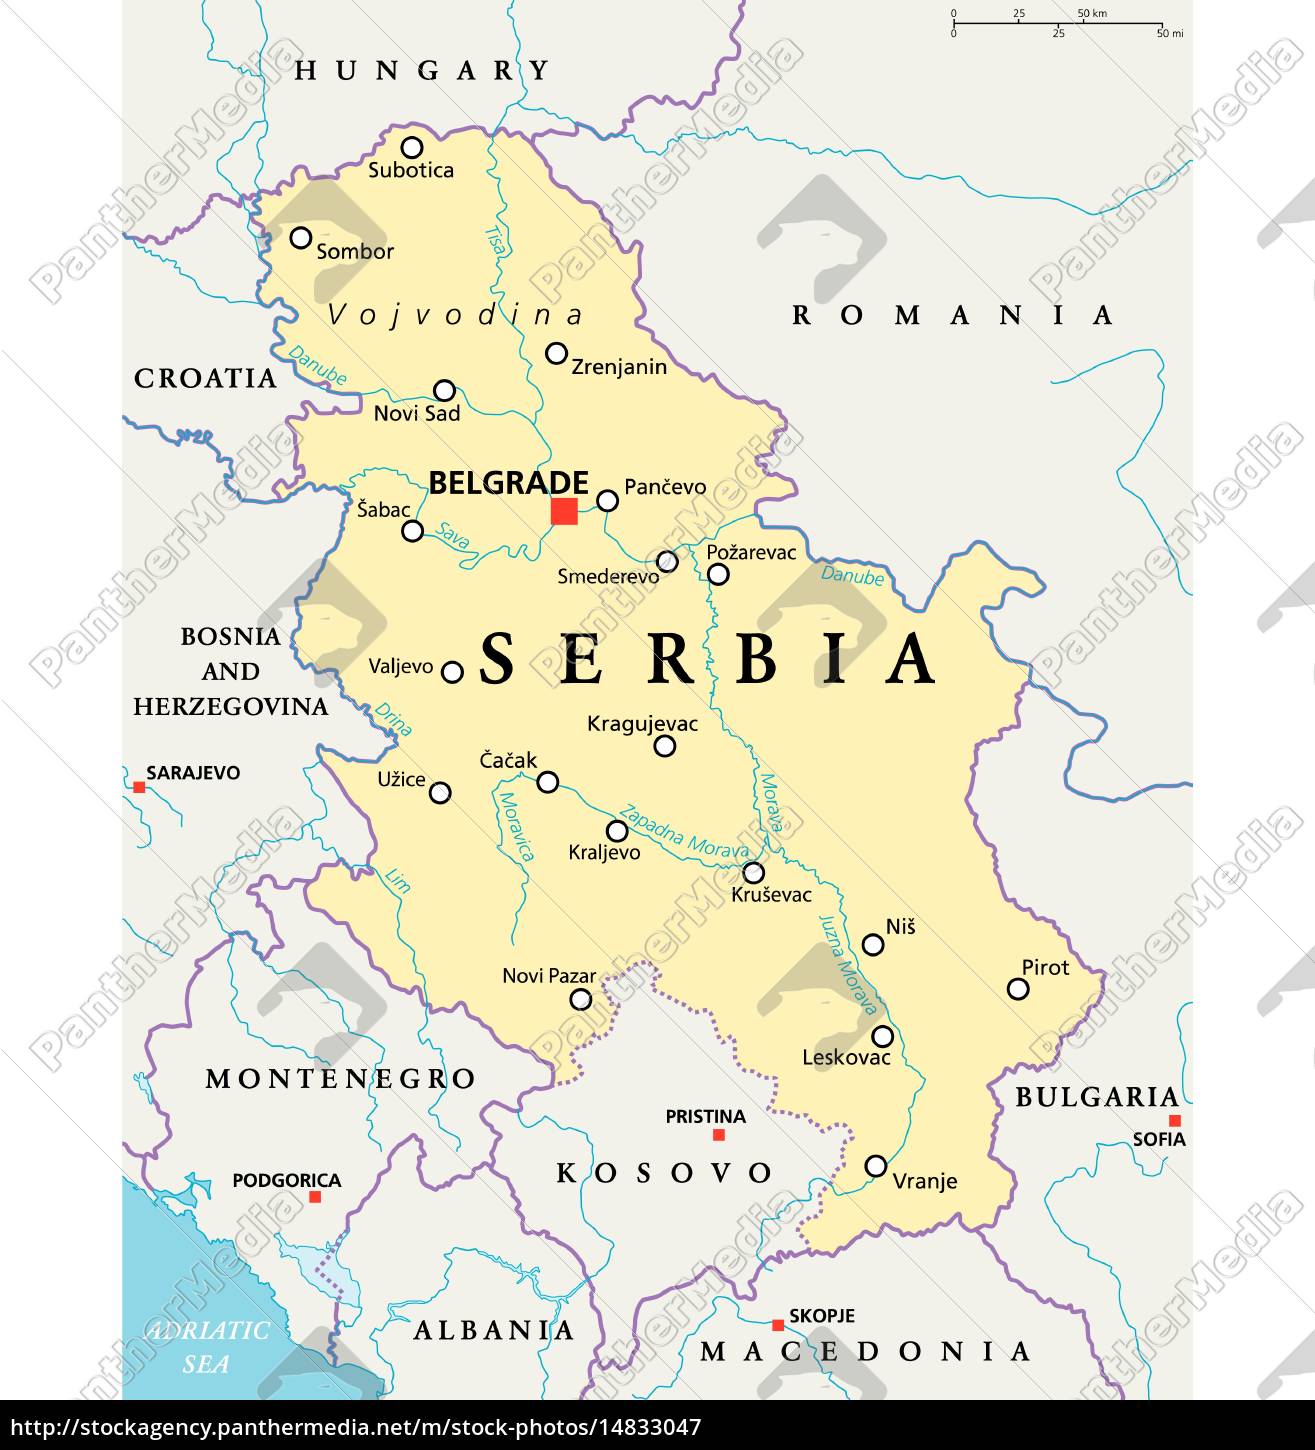 Kort Serbien serbien politisk kort   Stockphoto   #14833047   PantherMedia  Kort Serbien